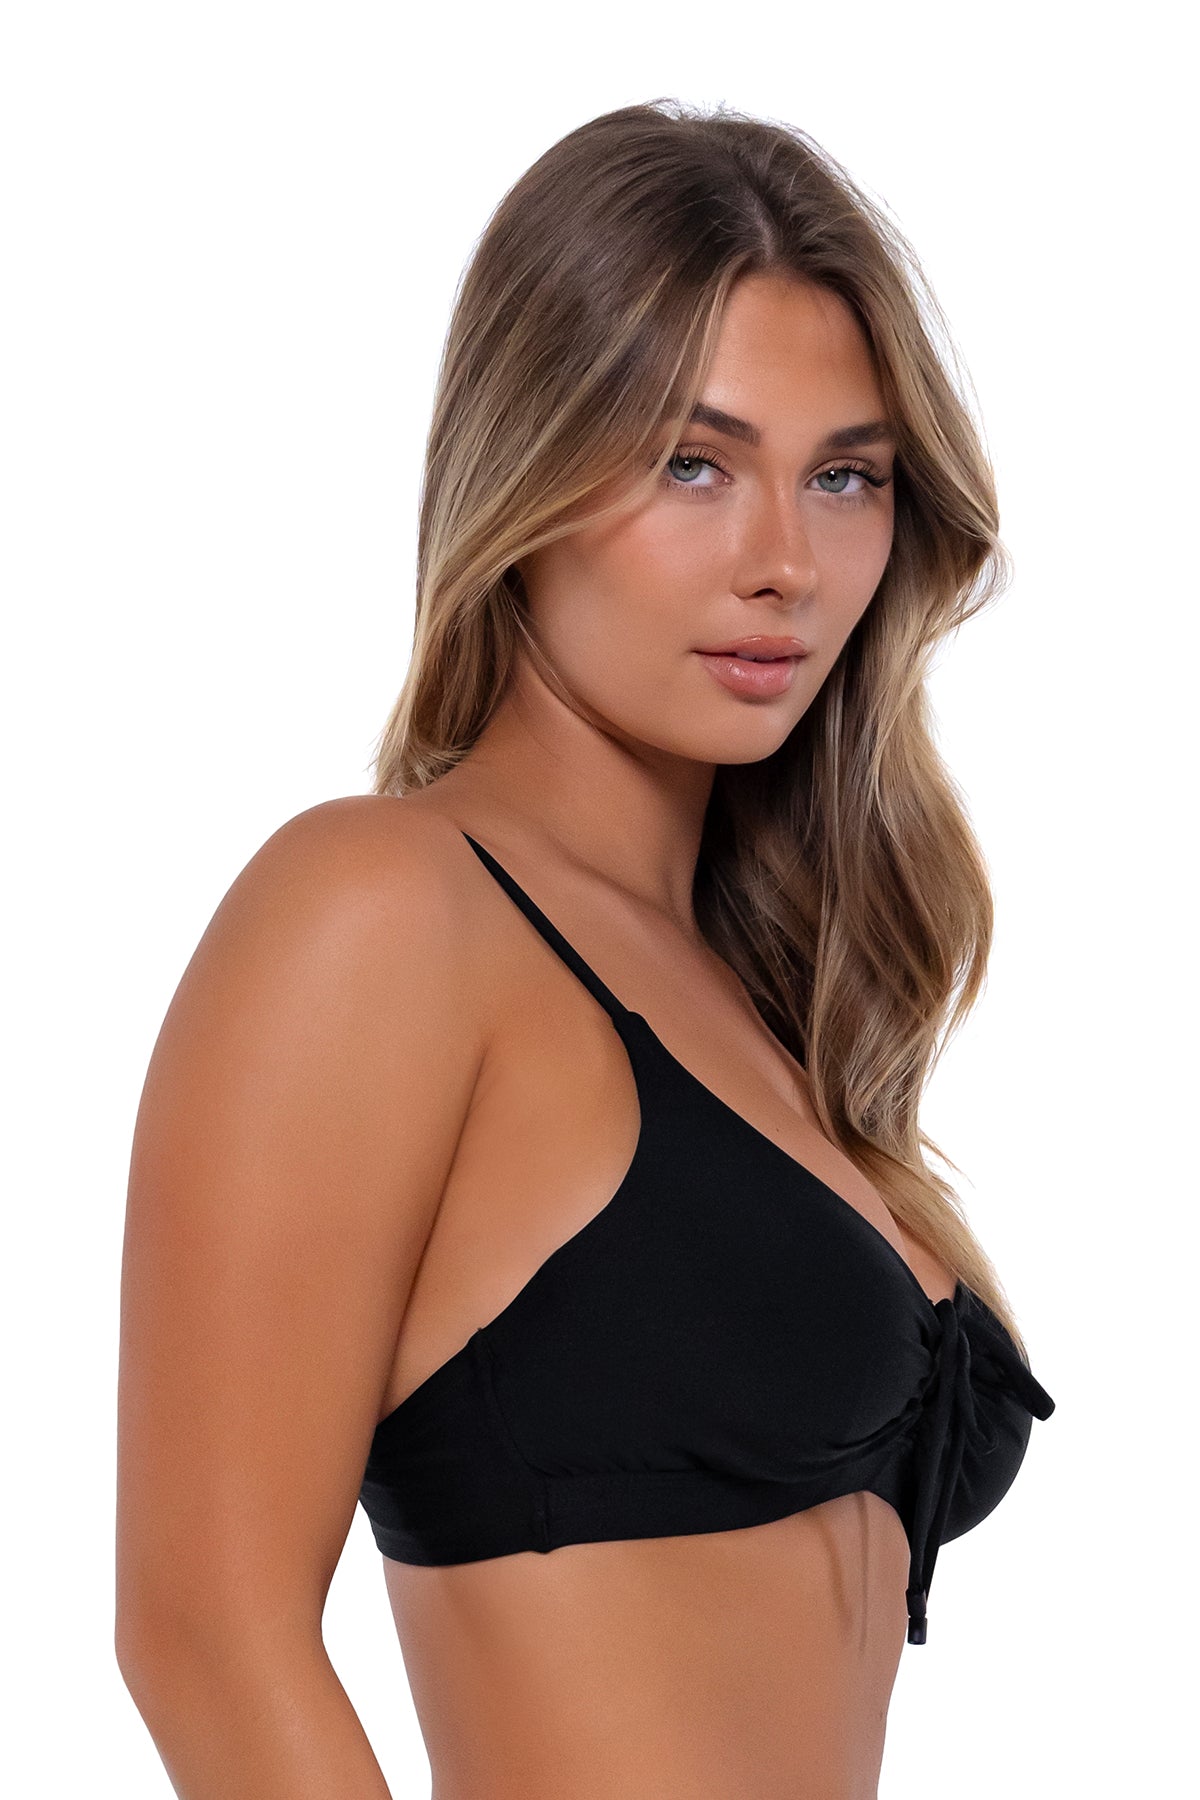 Sunsets Women's Black Colette Underwire Bralette Bikini Top - 510d-blck  38e/36f/34g Black : Target